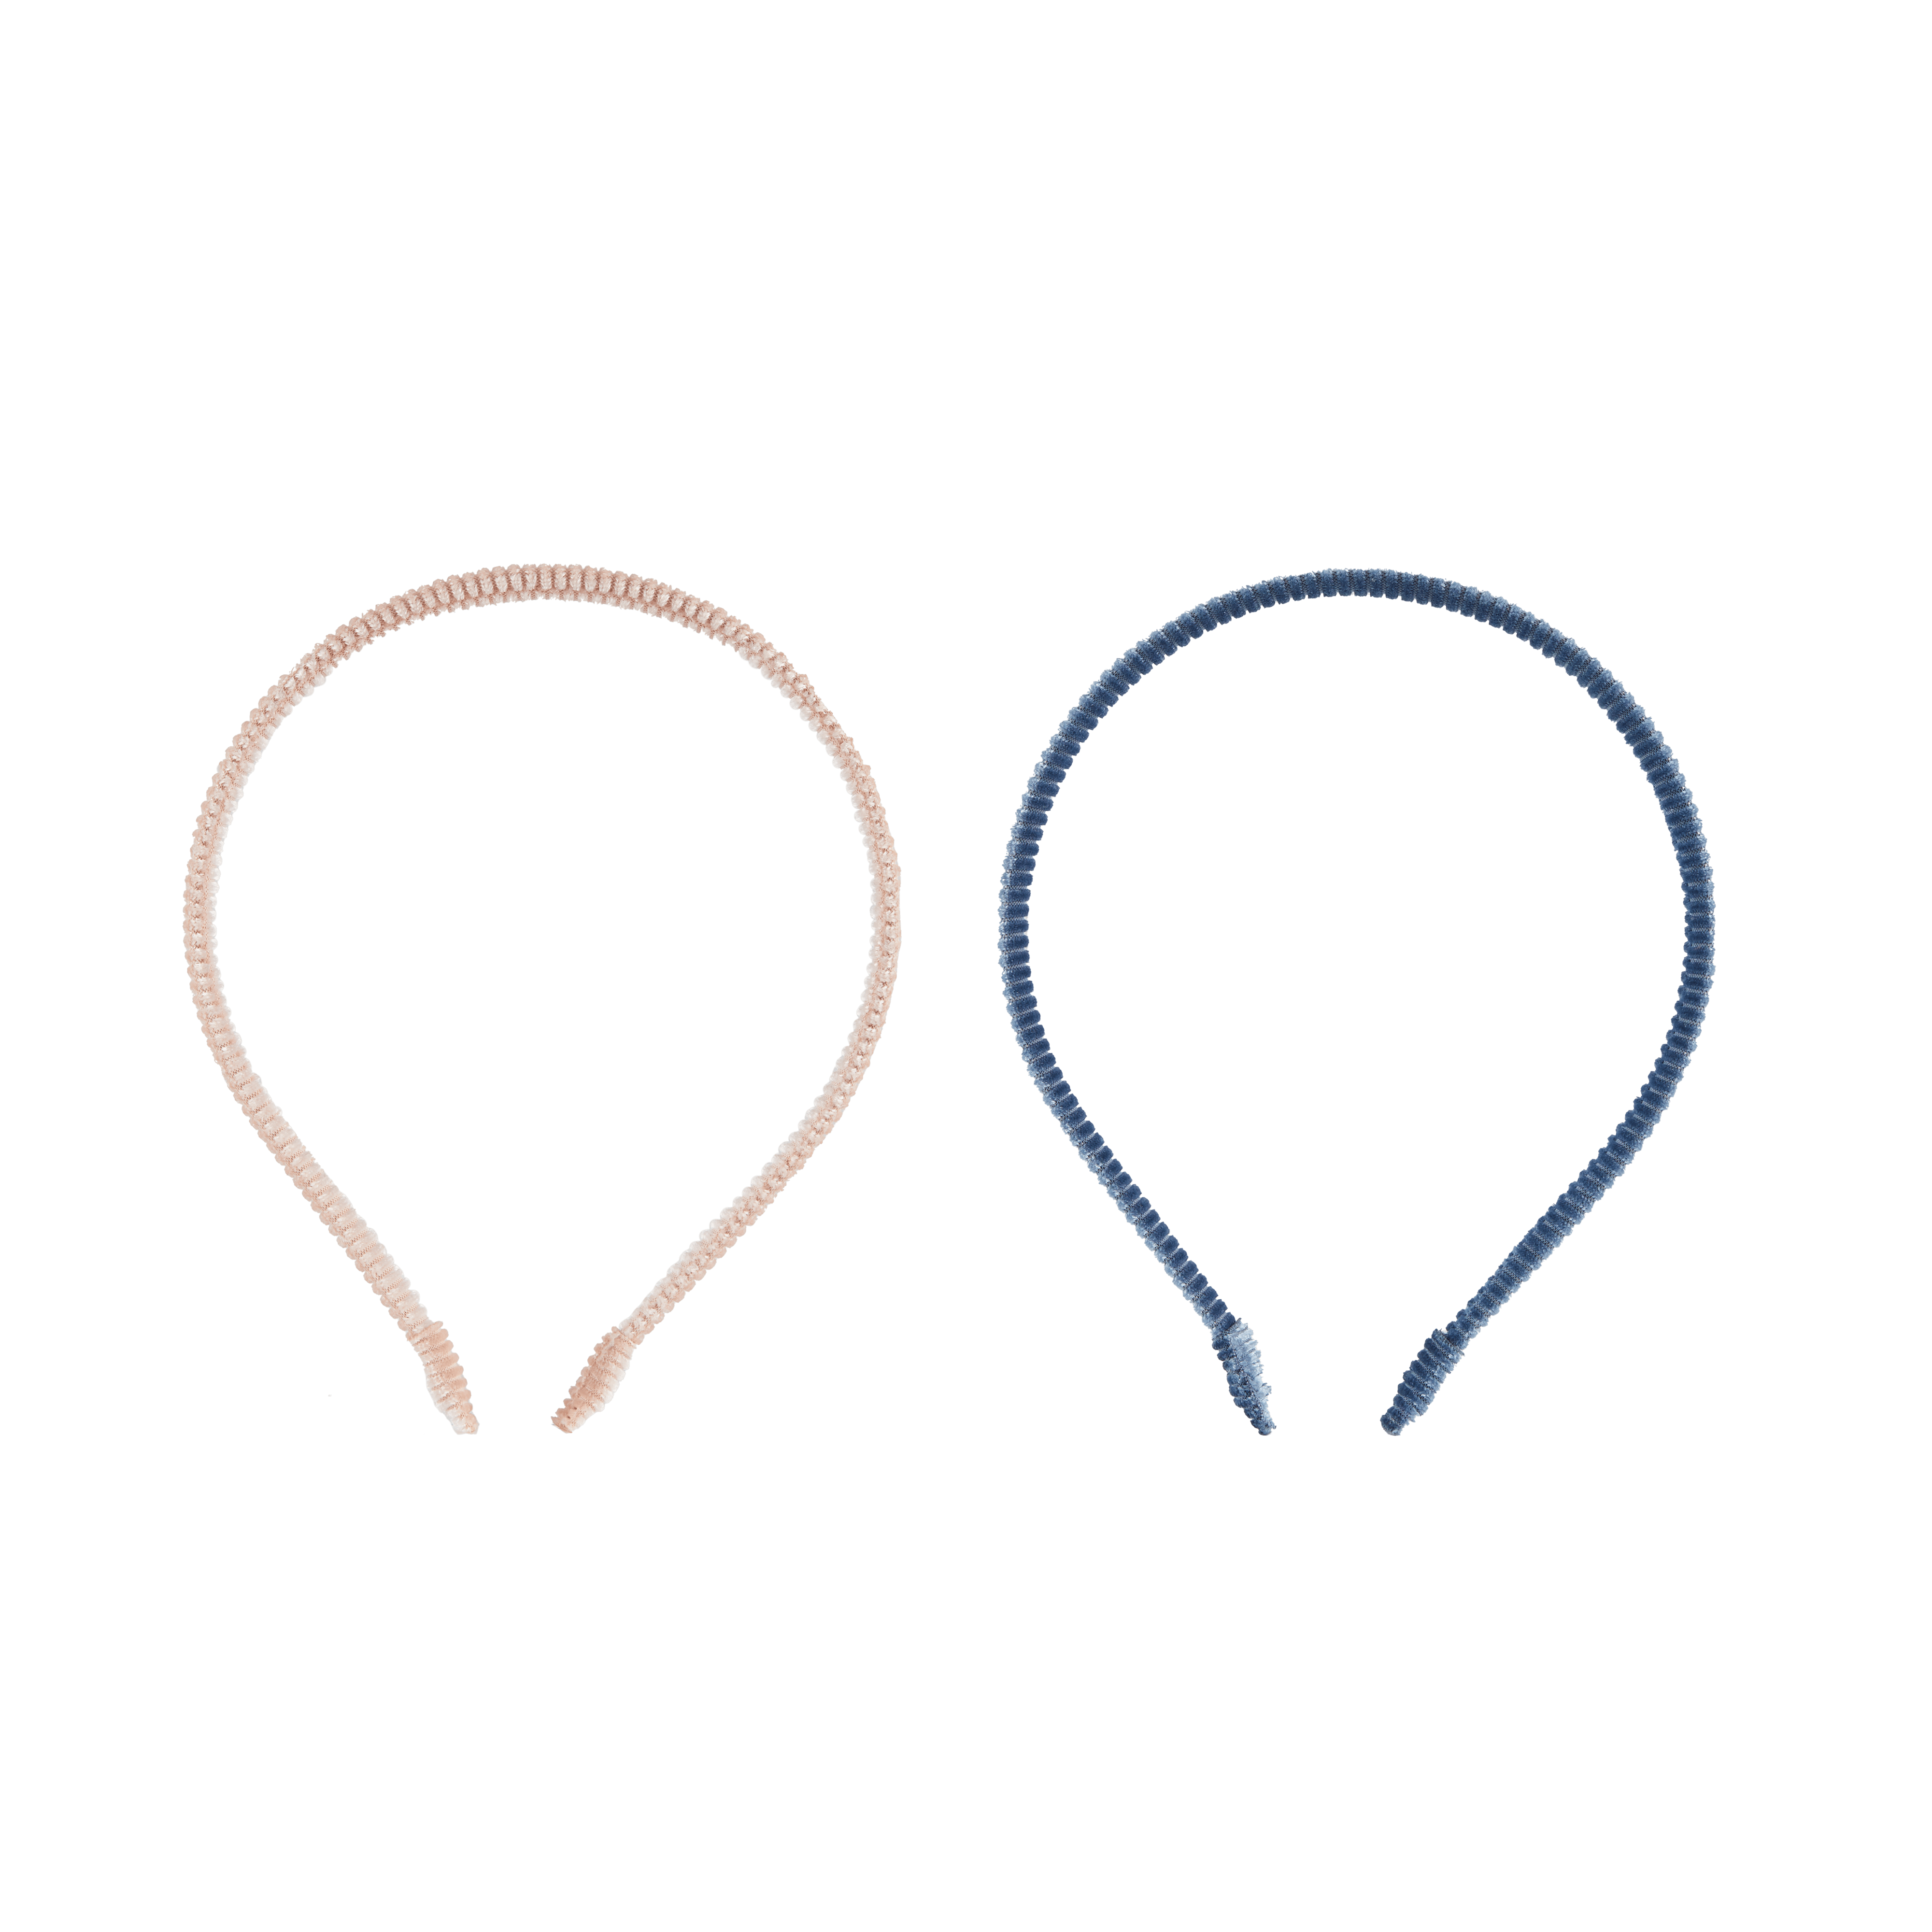 Corduroy Headband set - 2 pack Pink & Blue